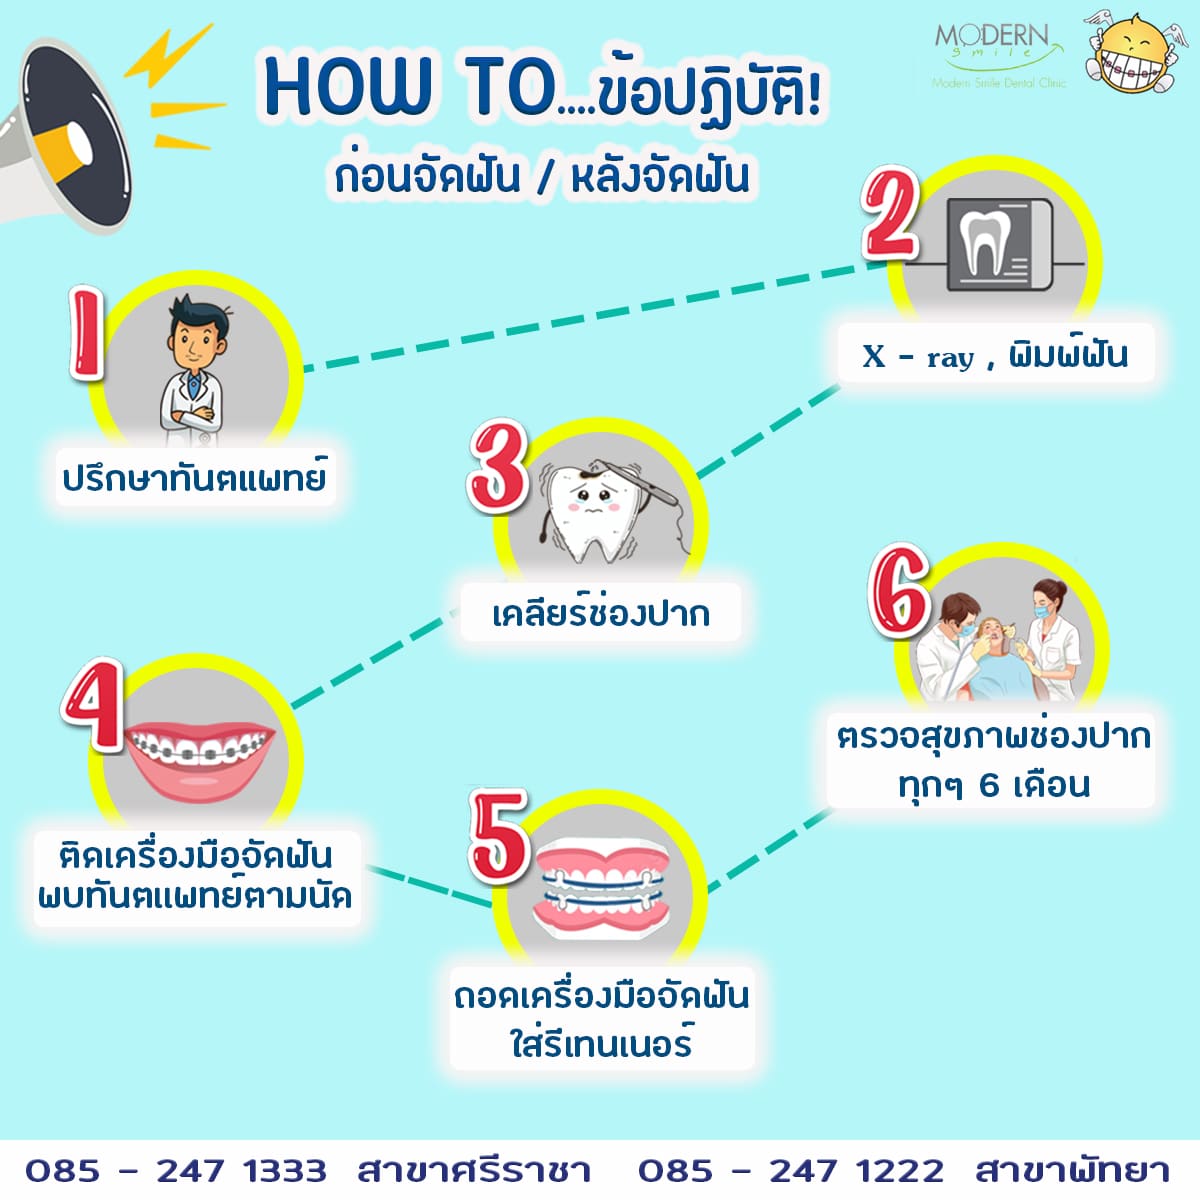 How To 18 ข้อปฏิบัติ หลังการติดเครื่องมือจัดฟัน ที่คนจัดฟันต้องรู้ ยิ้มสวย  มั่นใจ